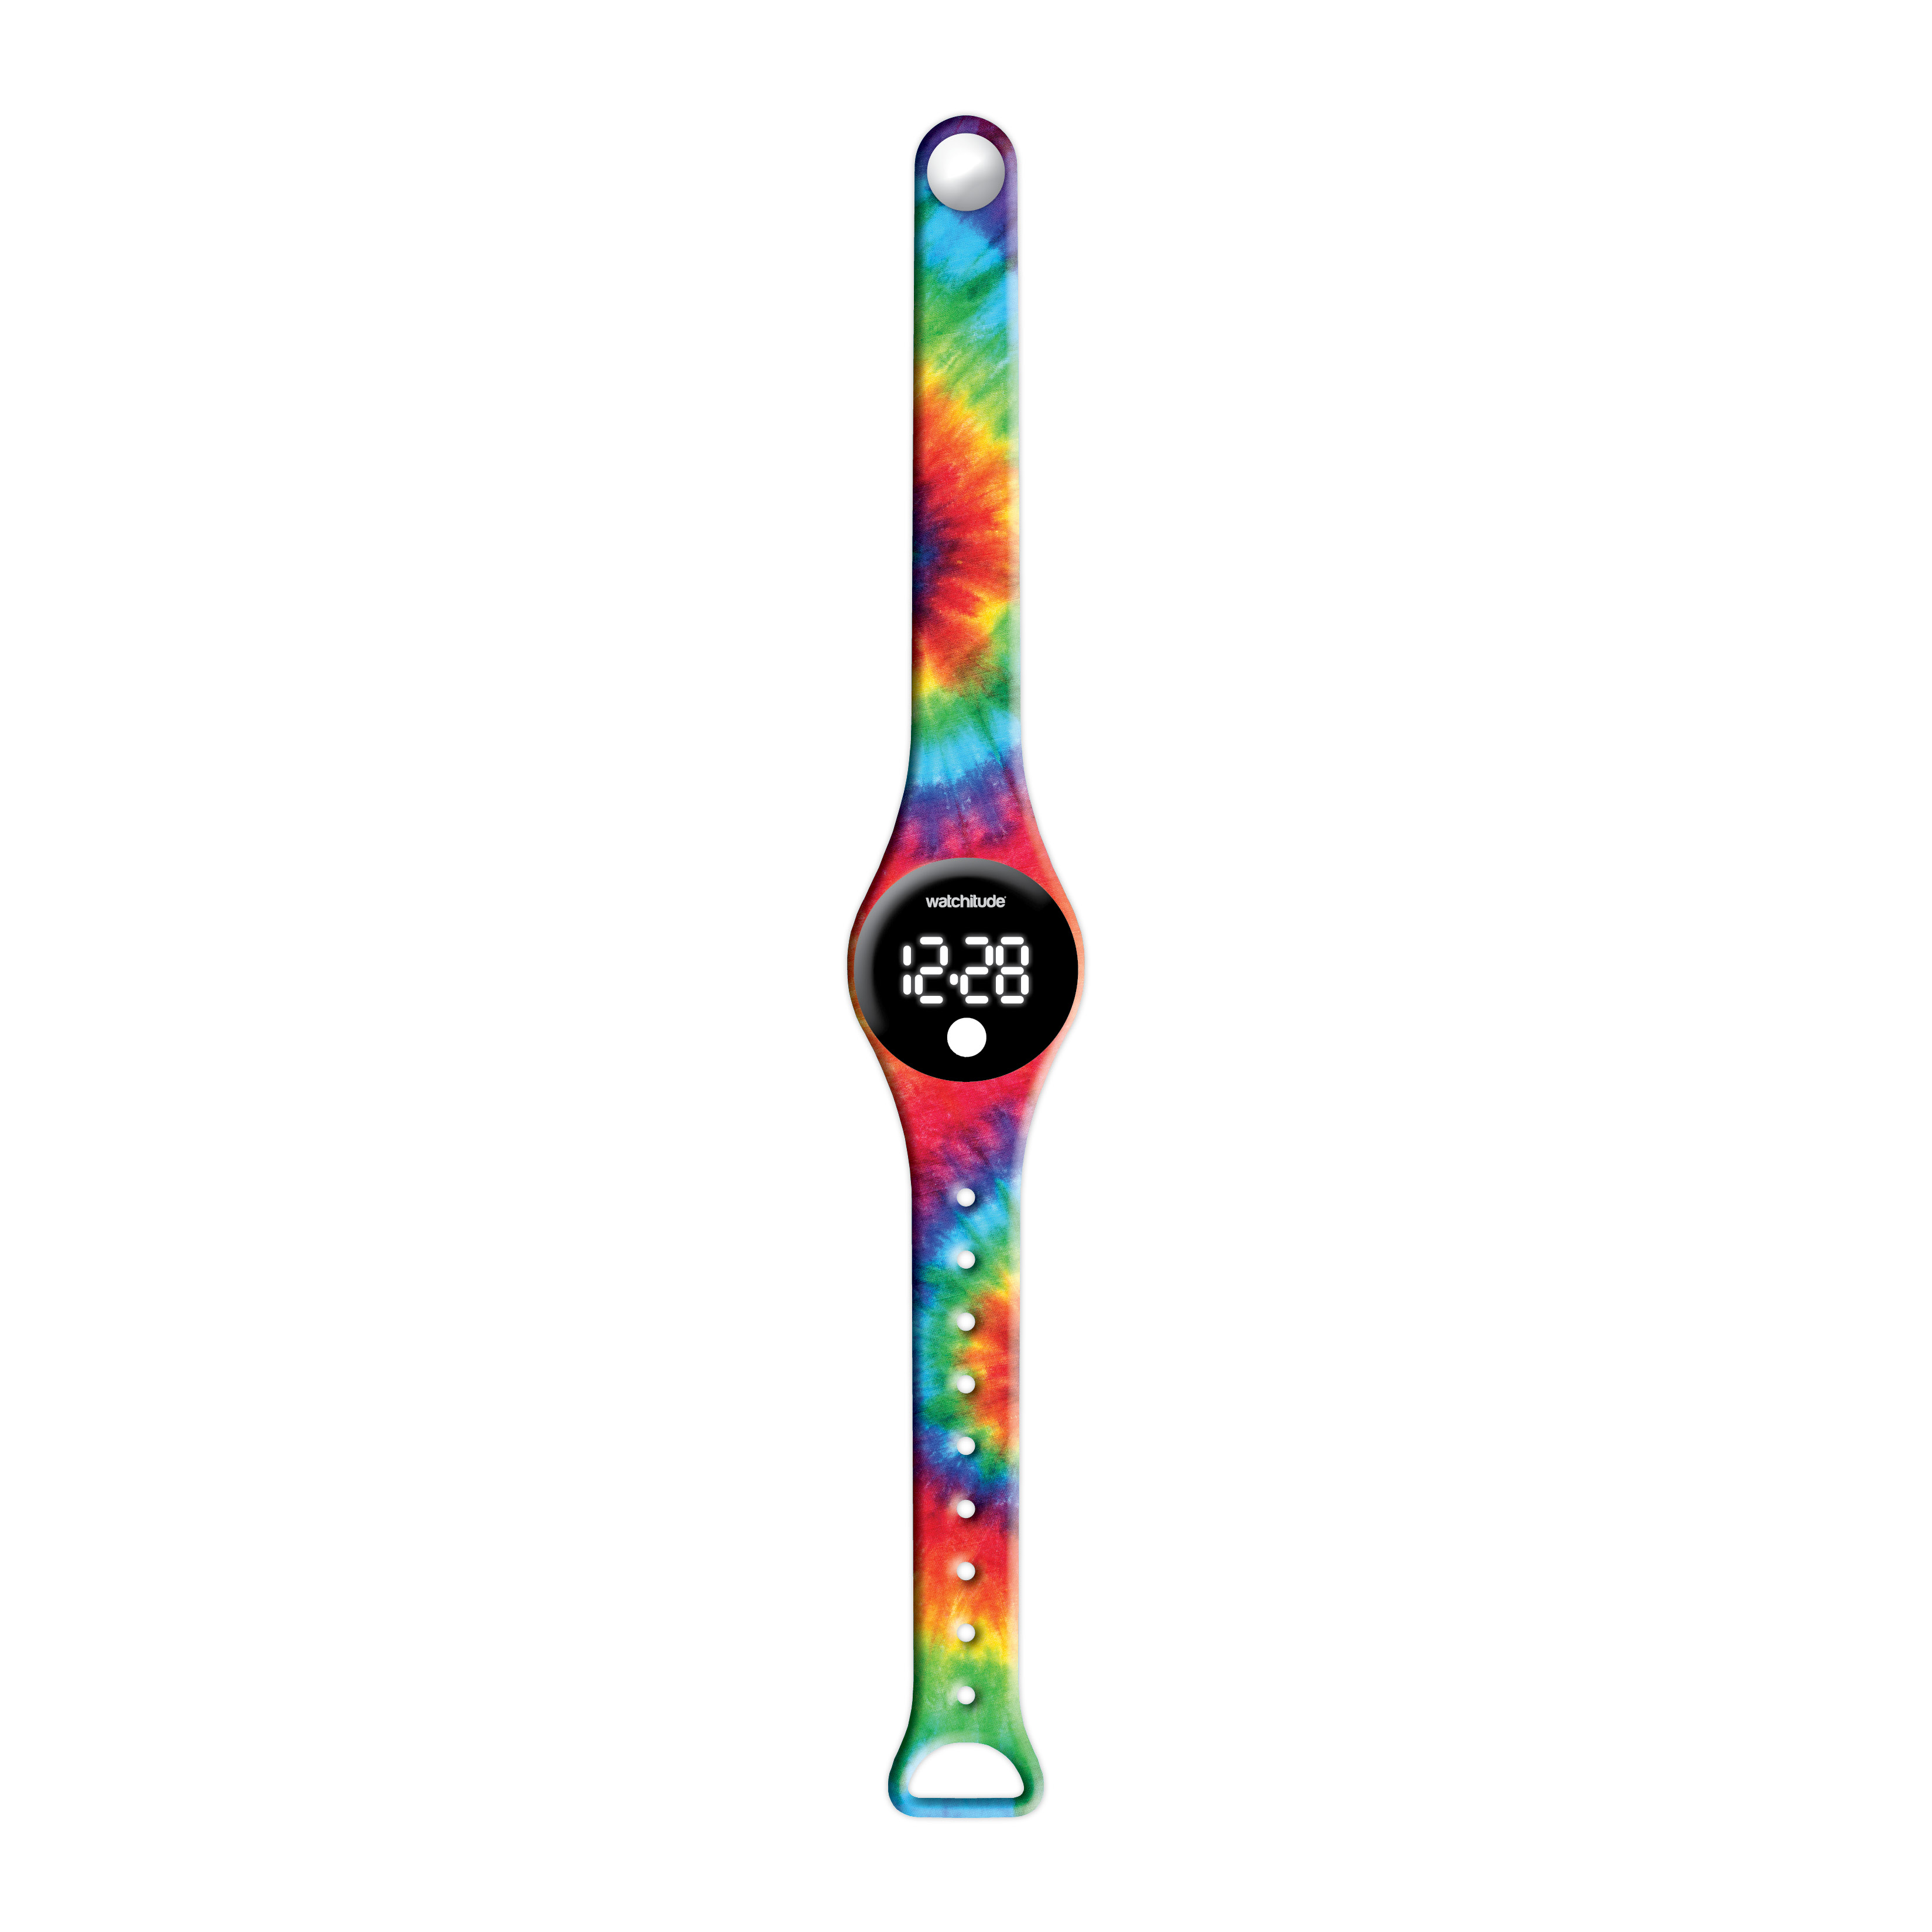 Tie Dye - Watchitude Blip - Digital Watch